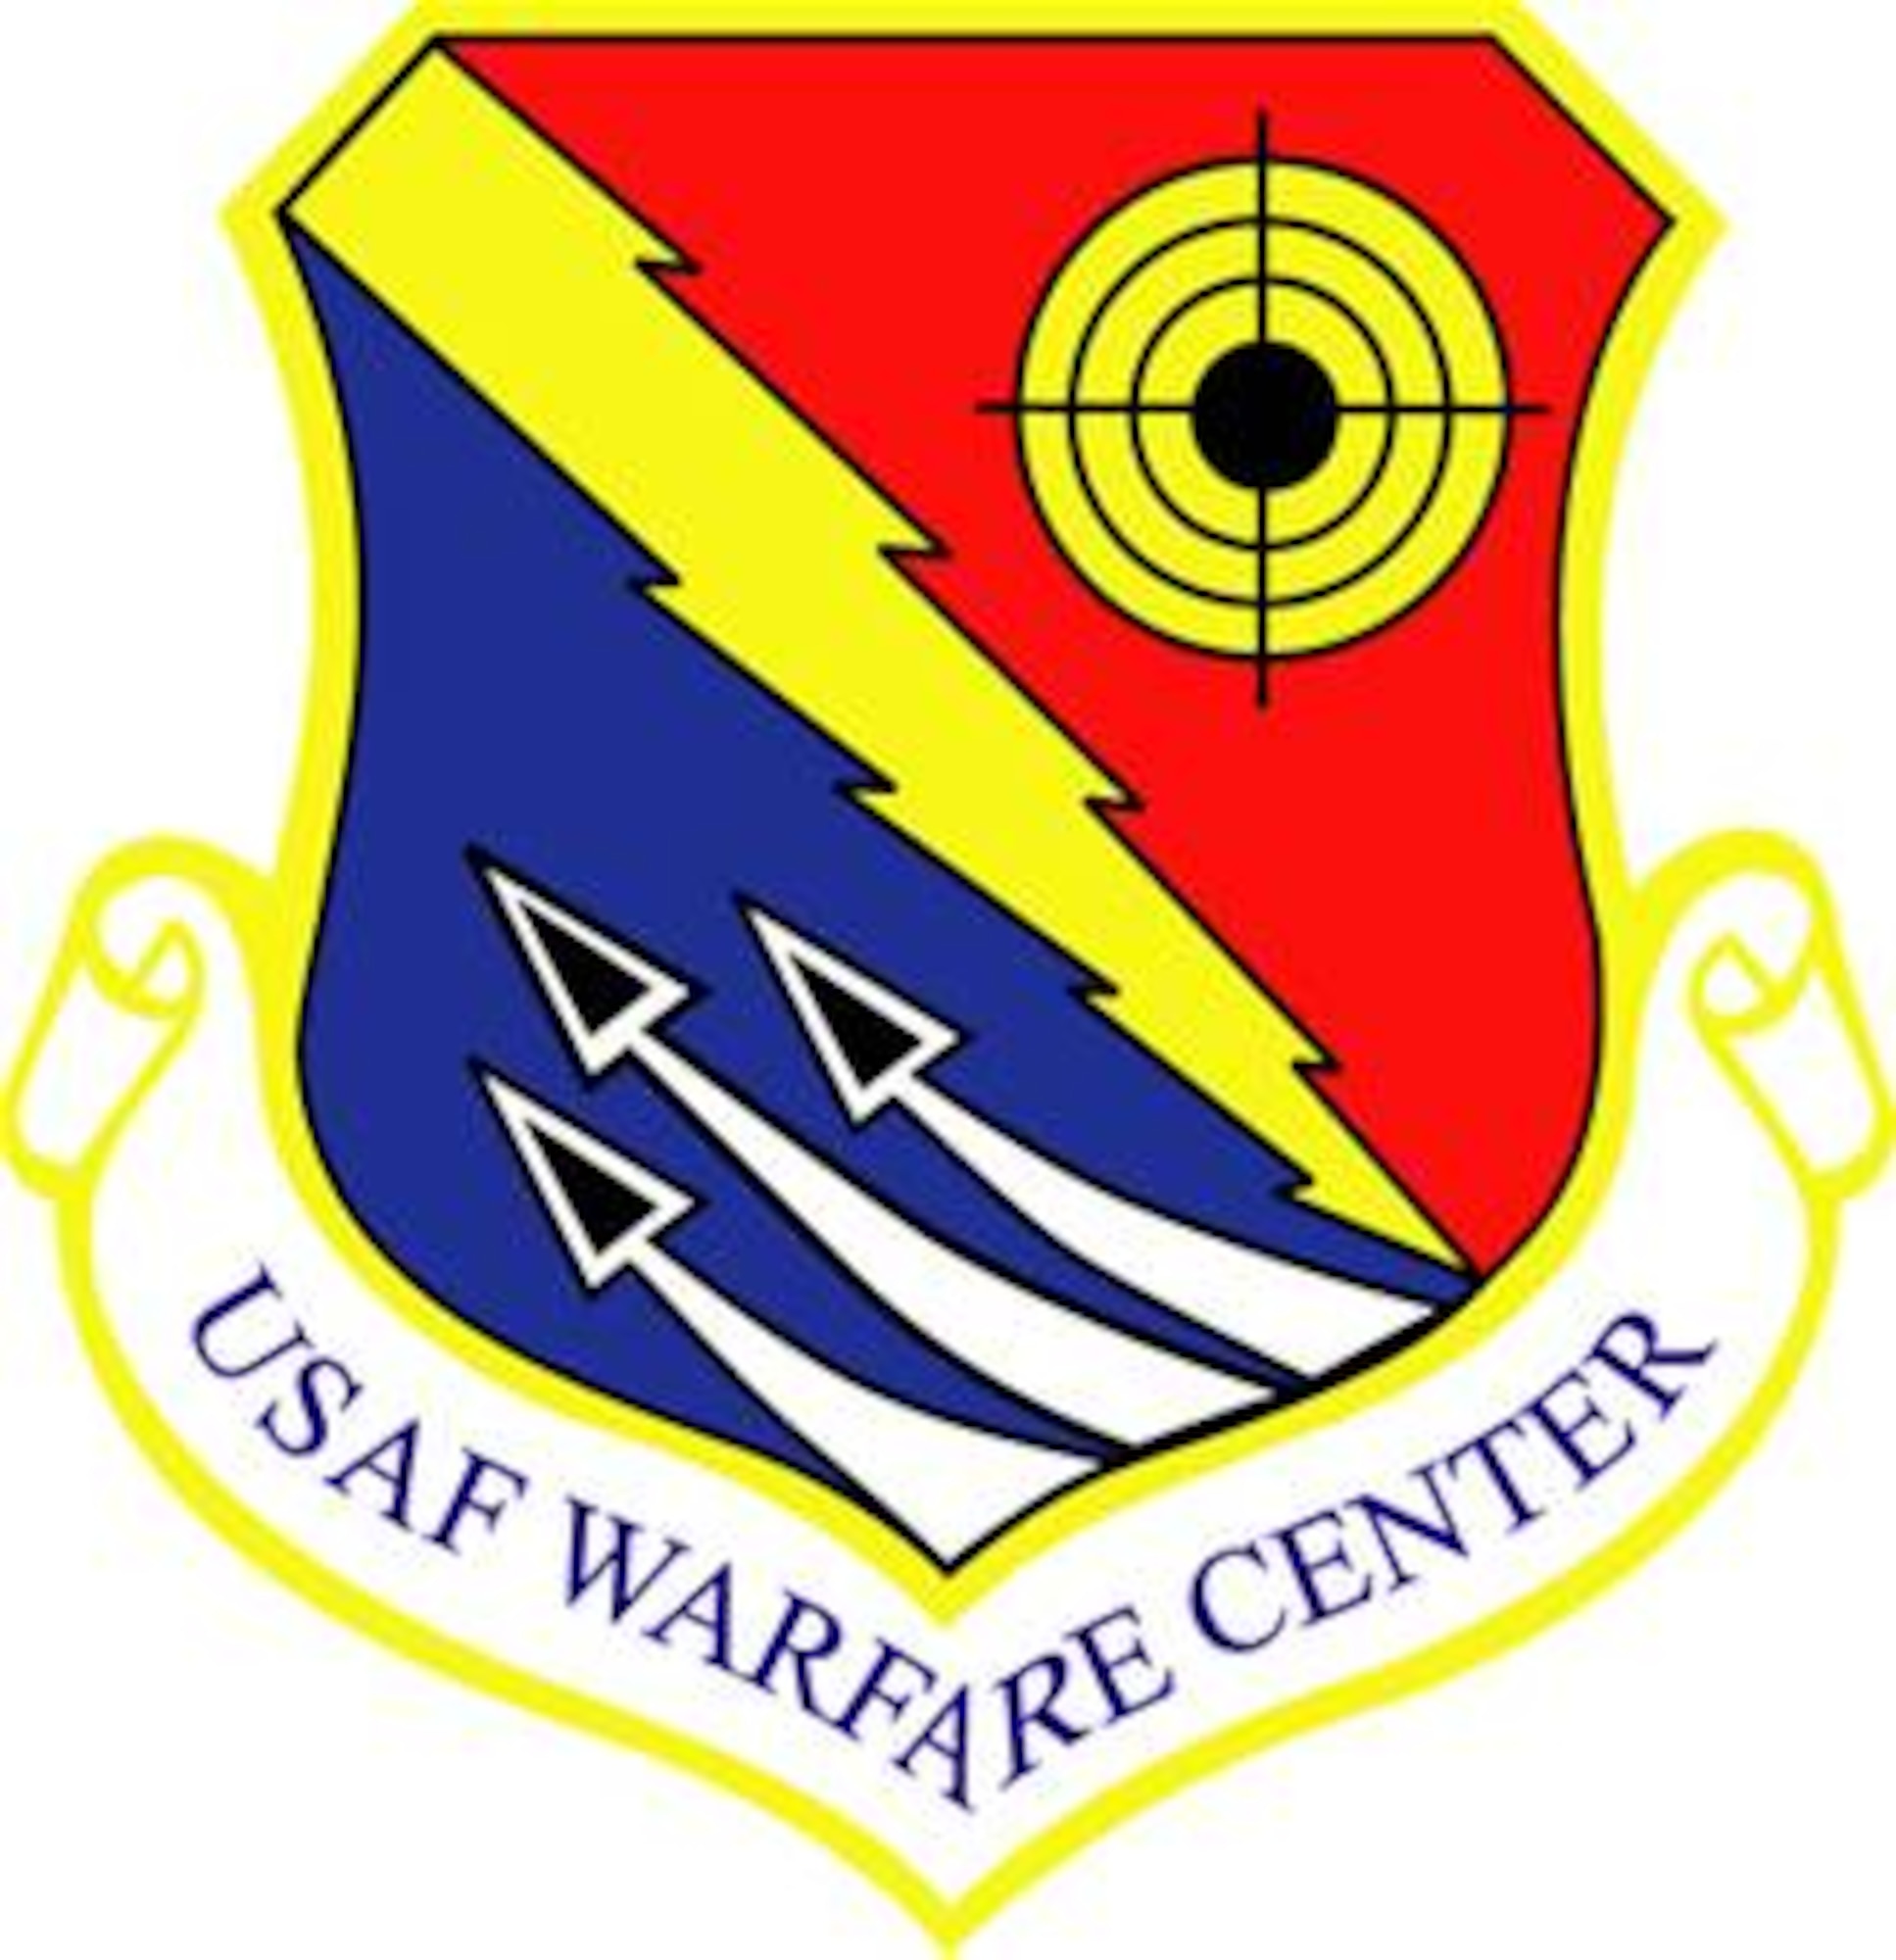 U.S. Air Force Warfare Center patch design, 